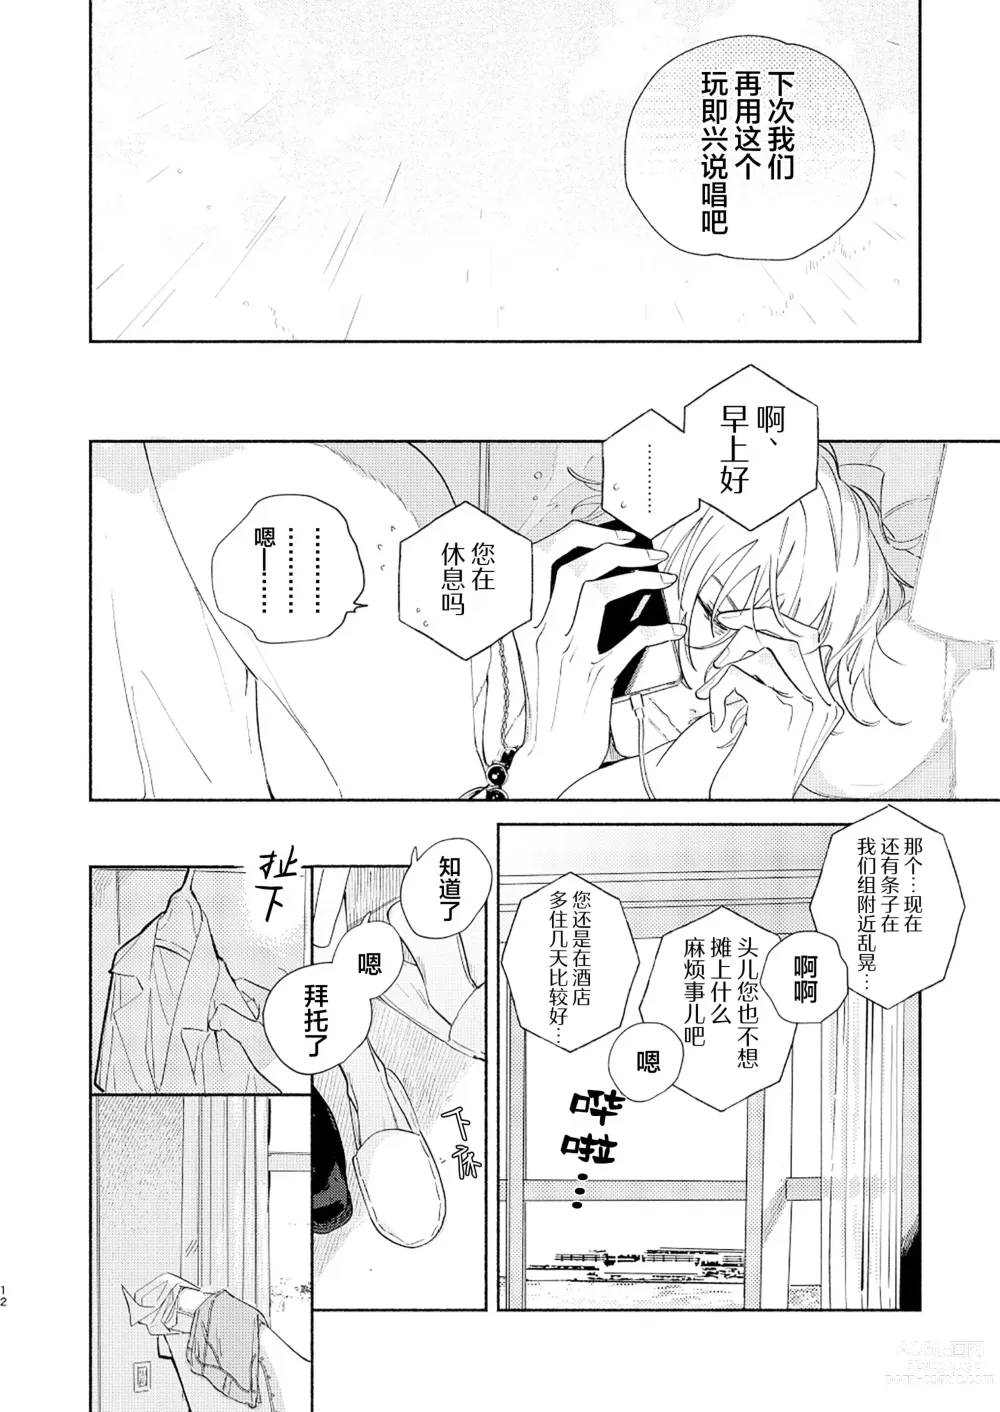 Page 9 of doujinshi 缺失的碎片